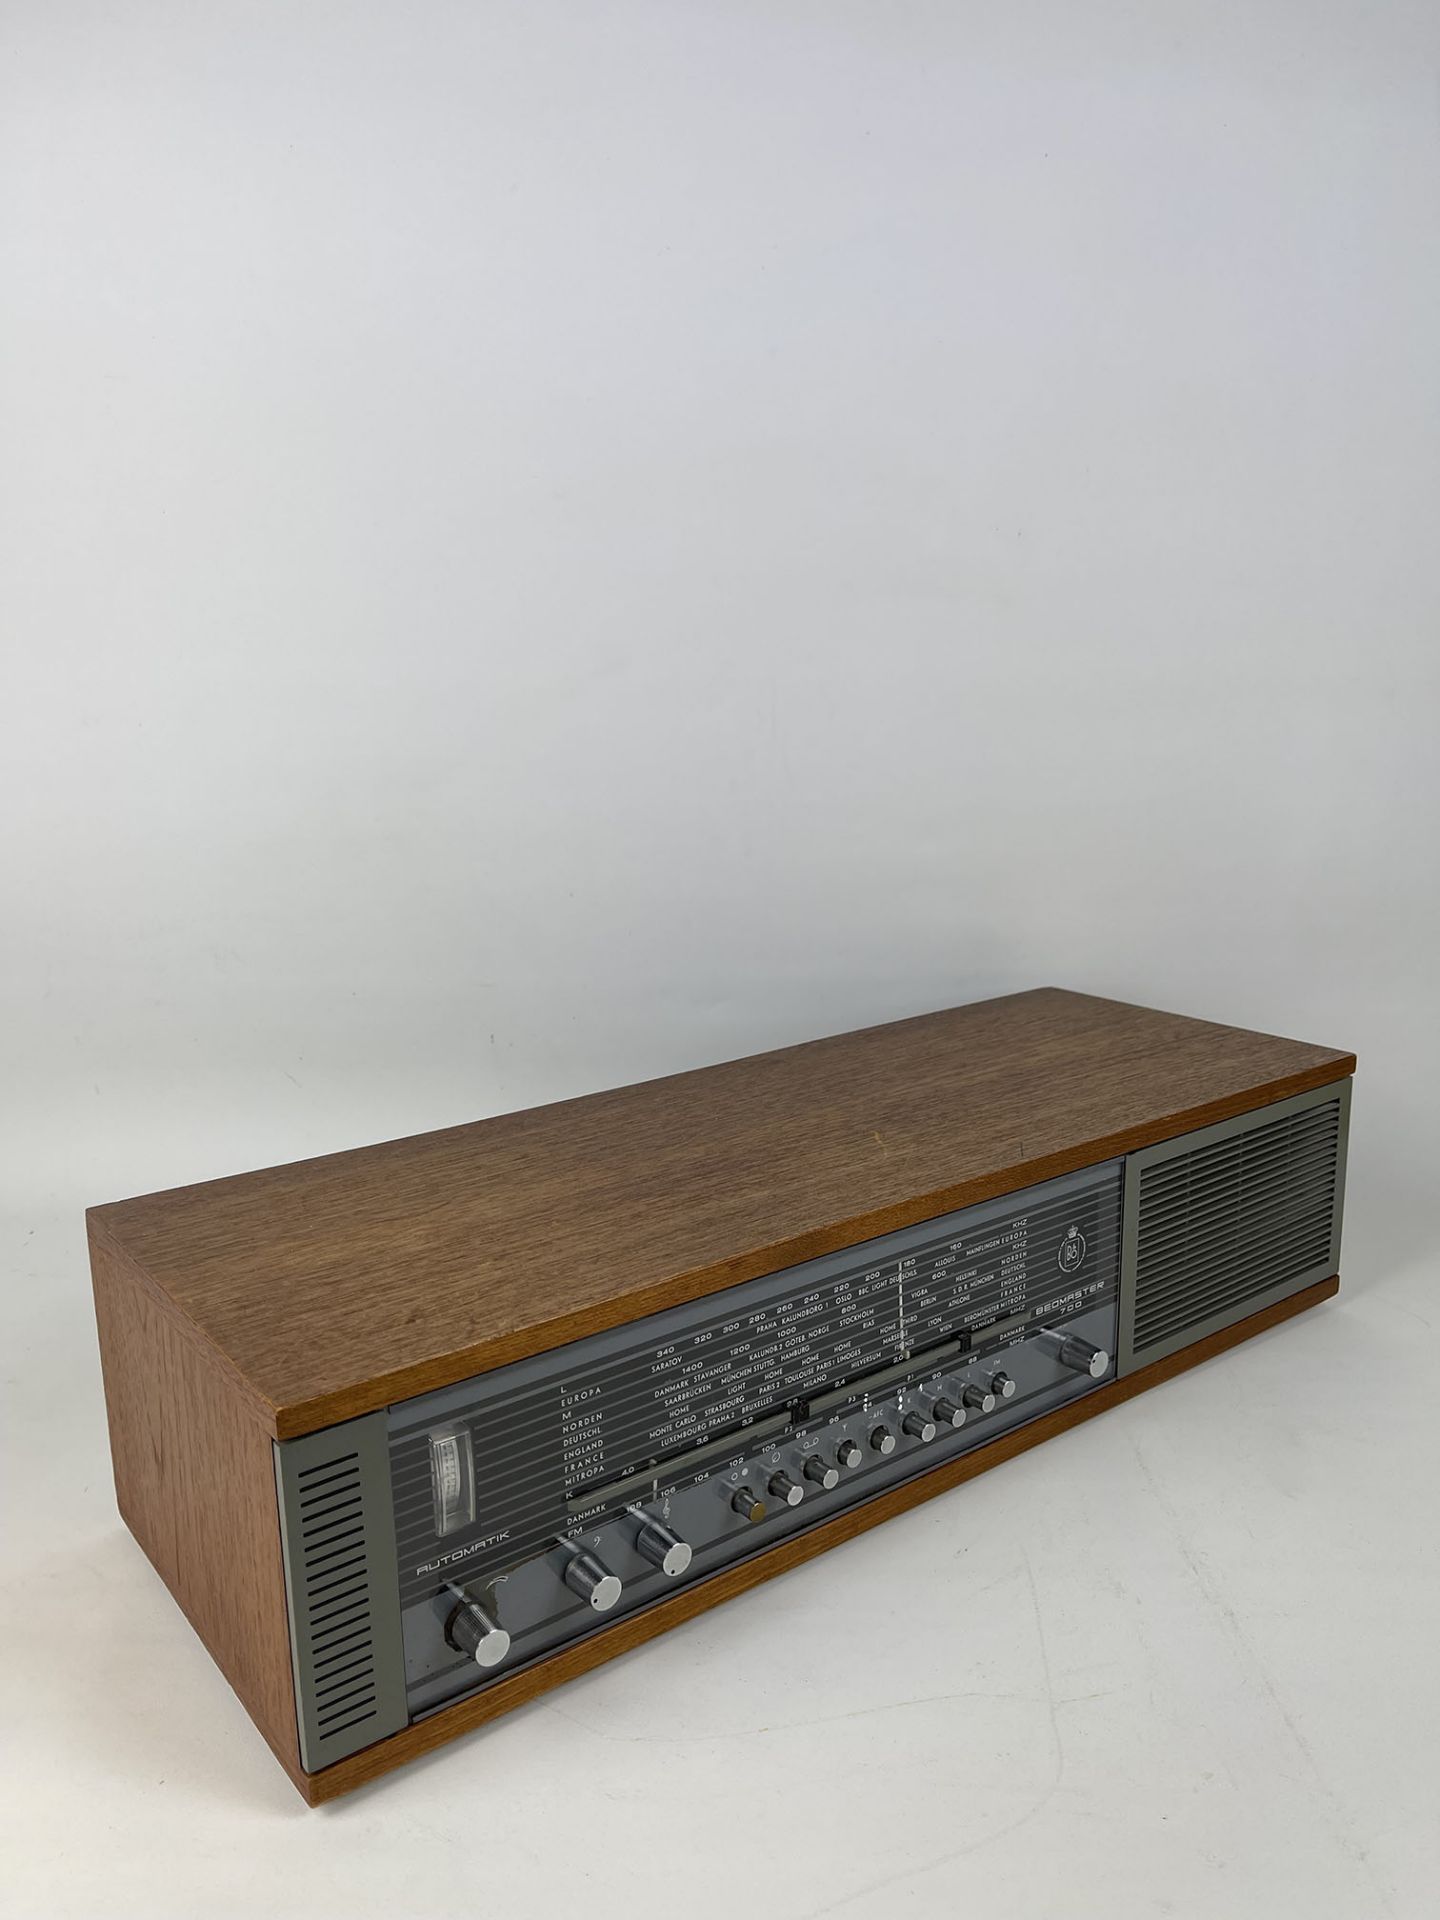 Bang & Olufsen Beomaster 700 Radio, 1969, Denmark - Image 2 of 10